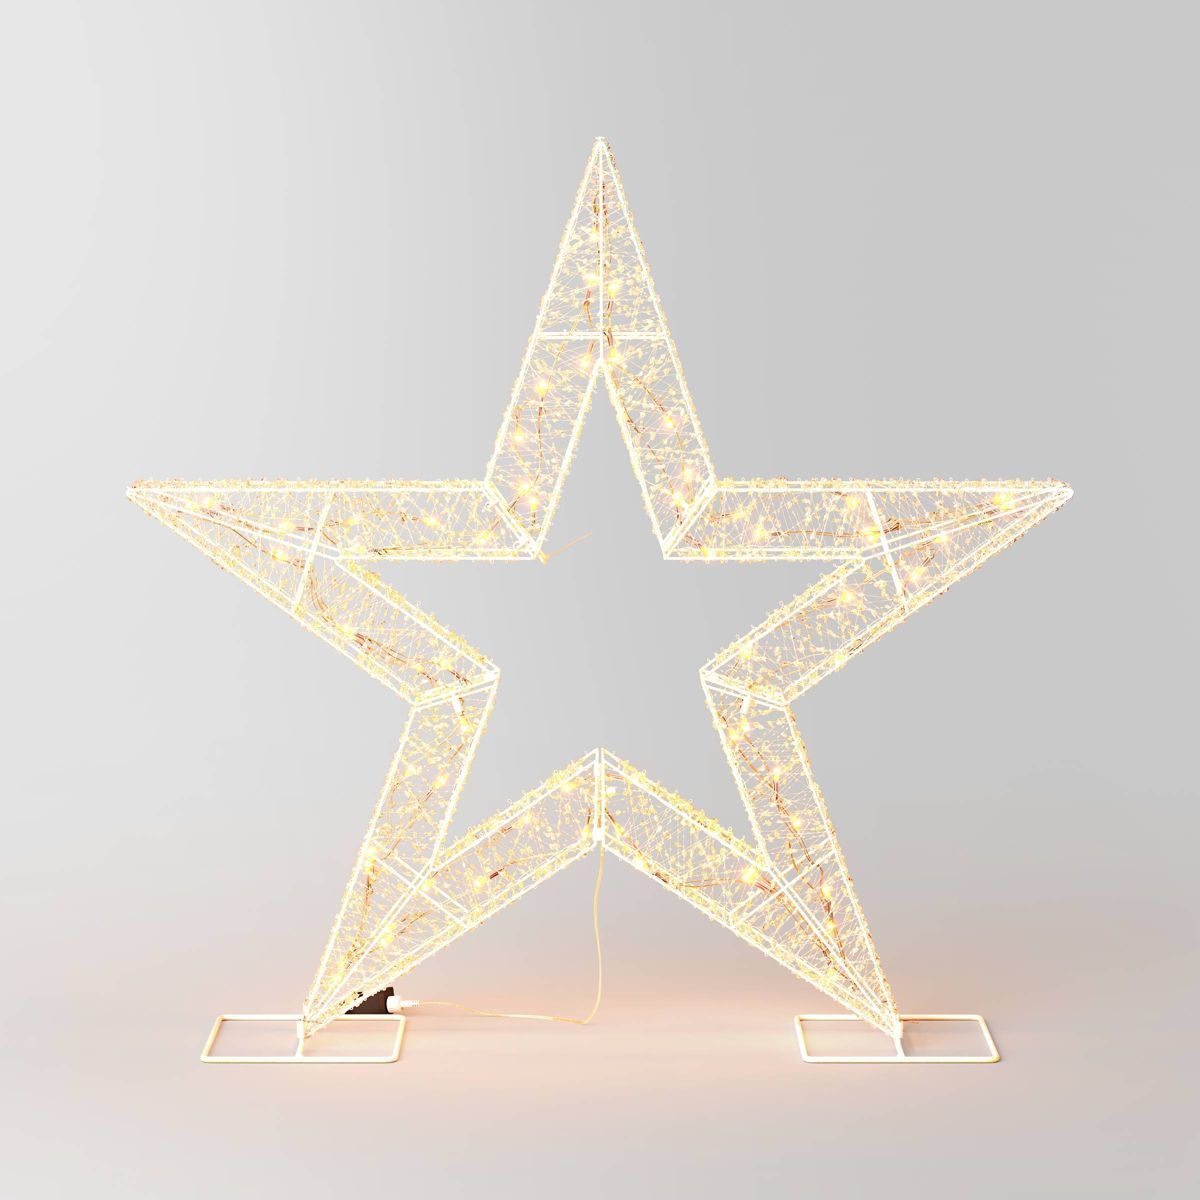 36" LED Crystal Ice Star Christmas Novelty Sculpture Light Warm White Lights - Wondershop™ | Target